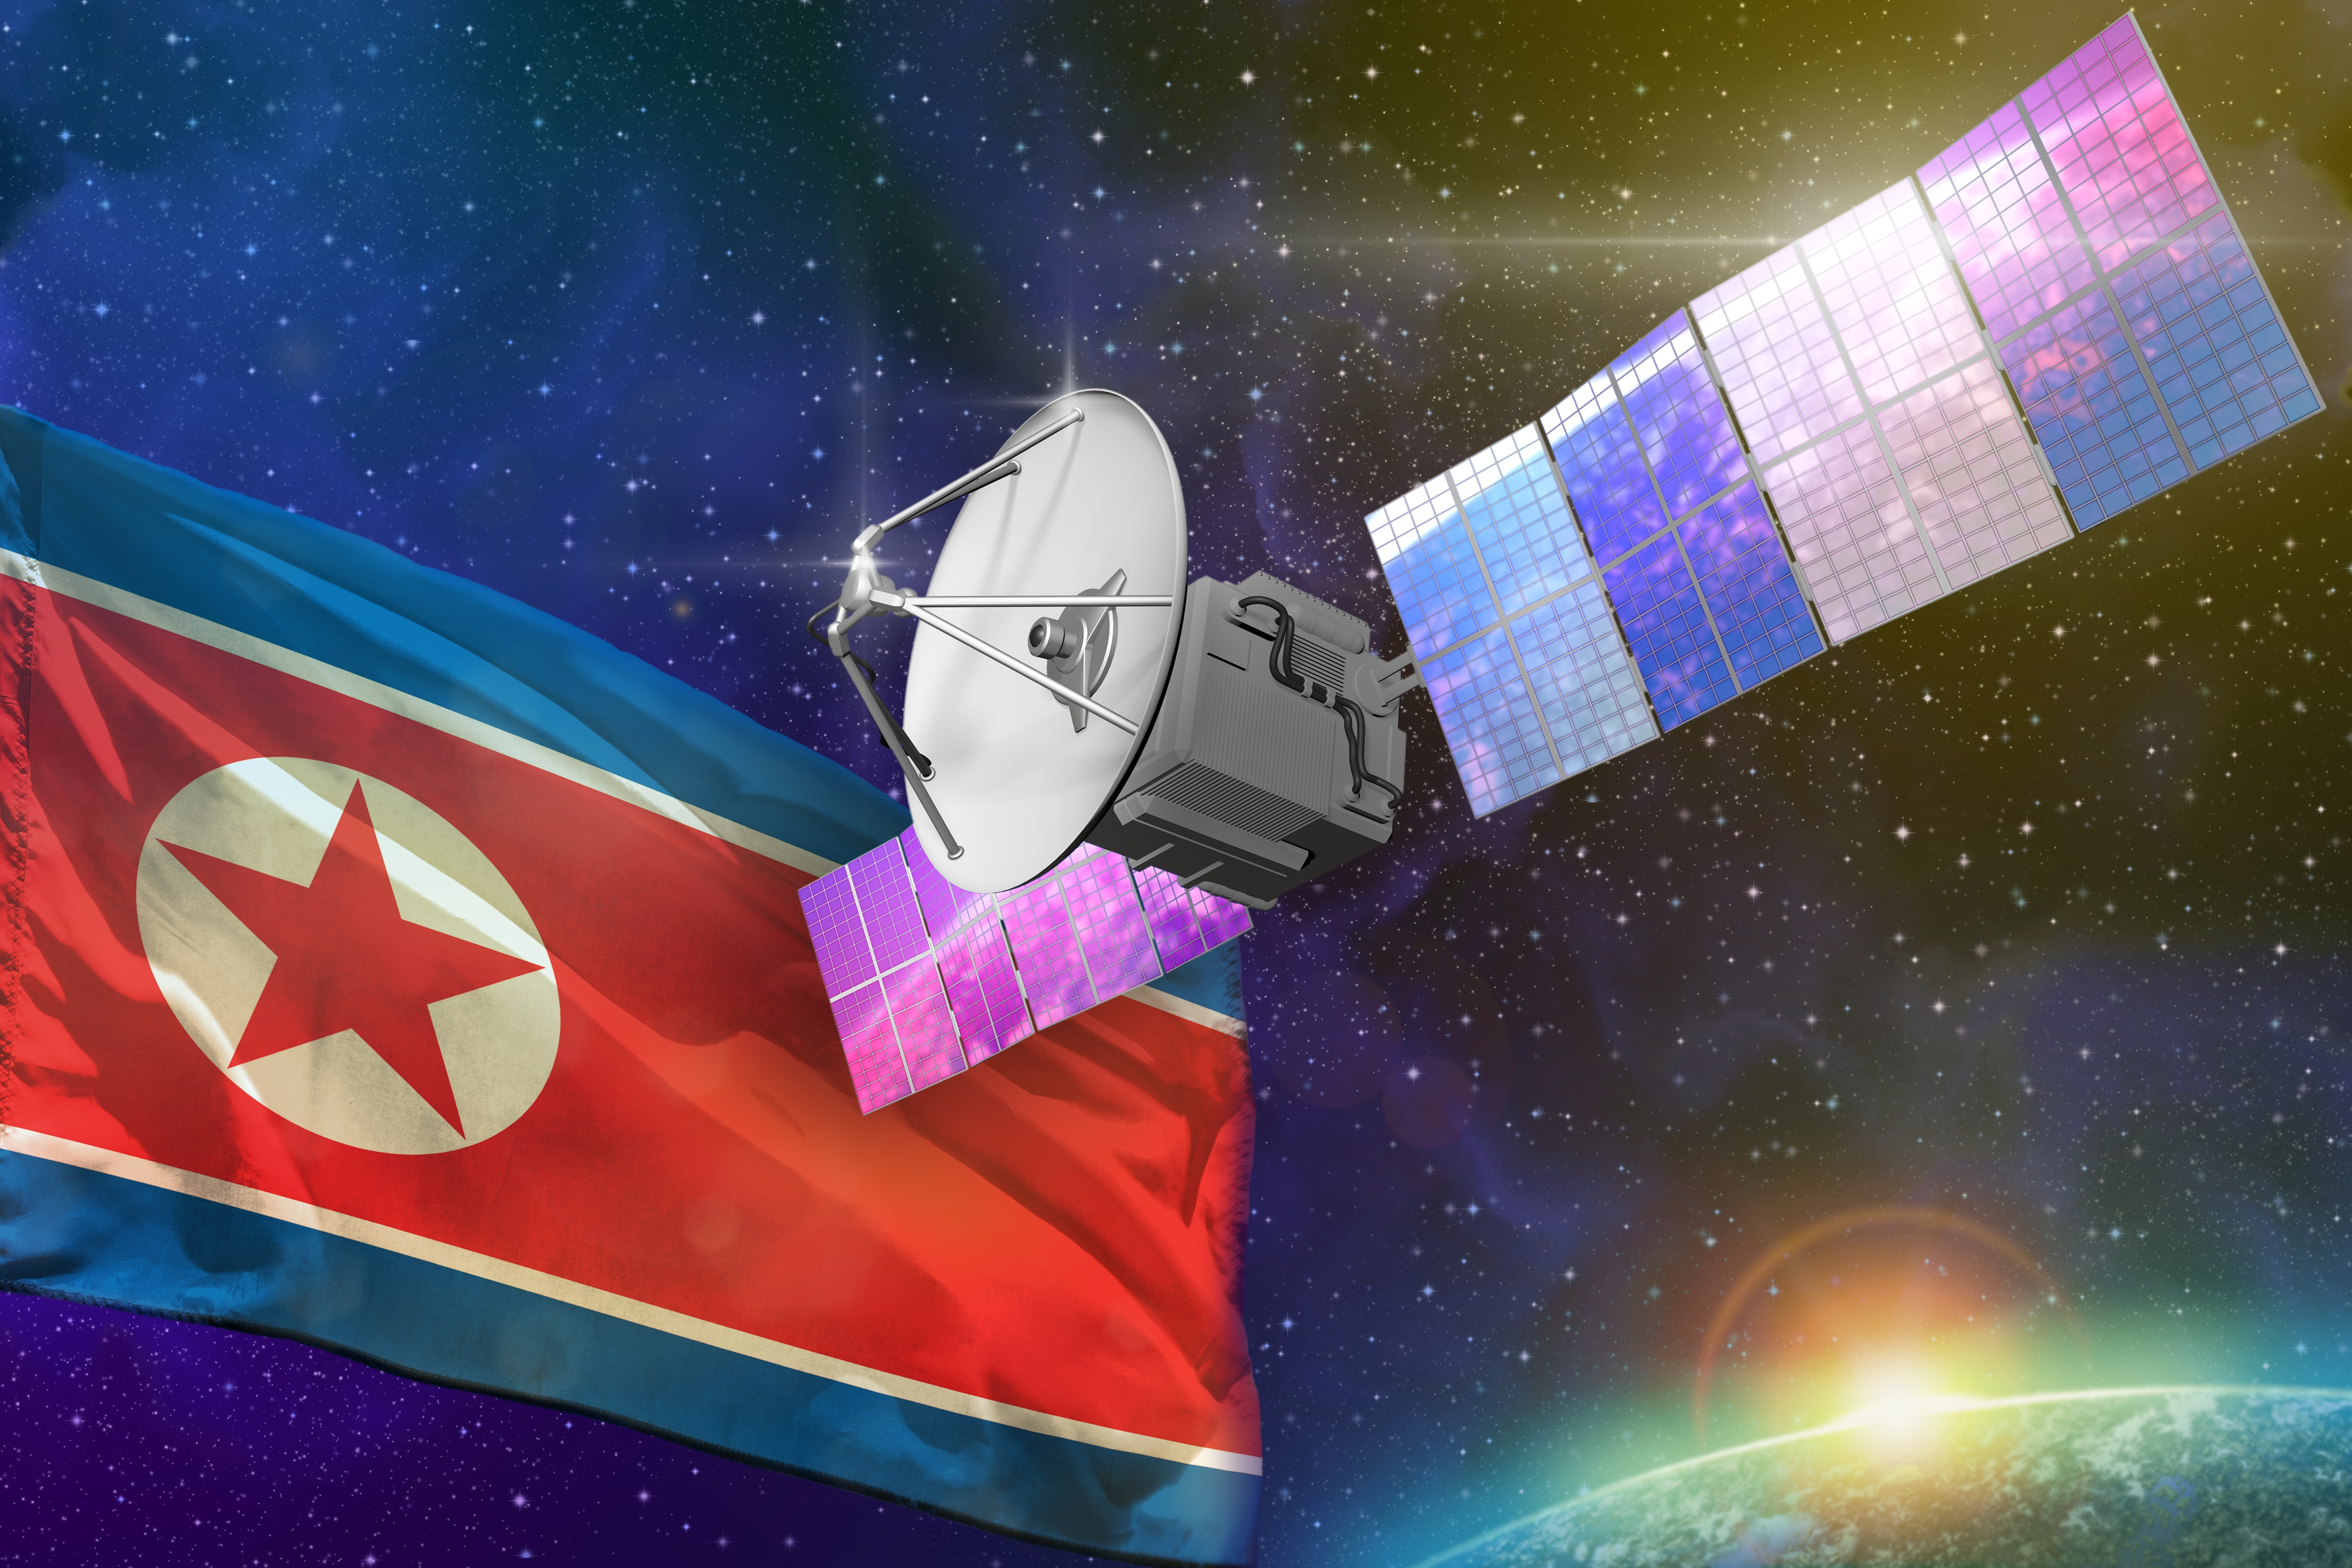 [Global NK 논평] 북한의 우주개발: 이상과 현실의 괴리 